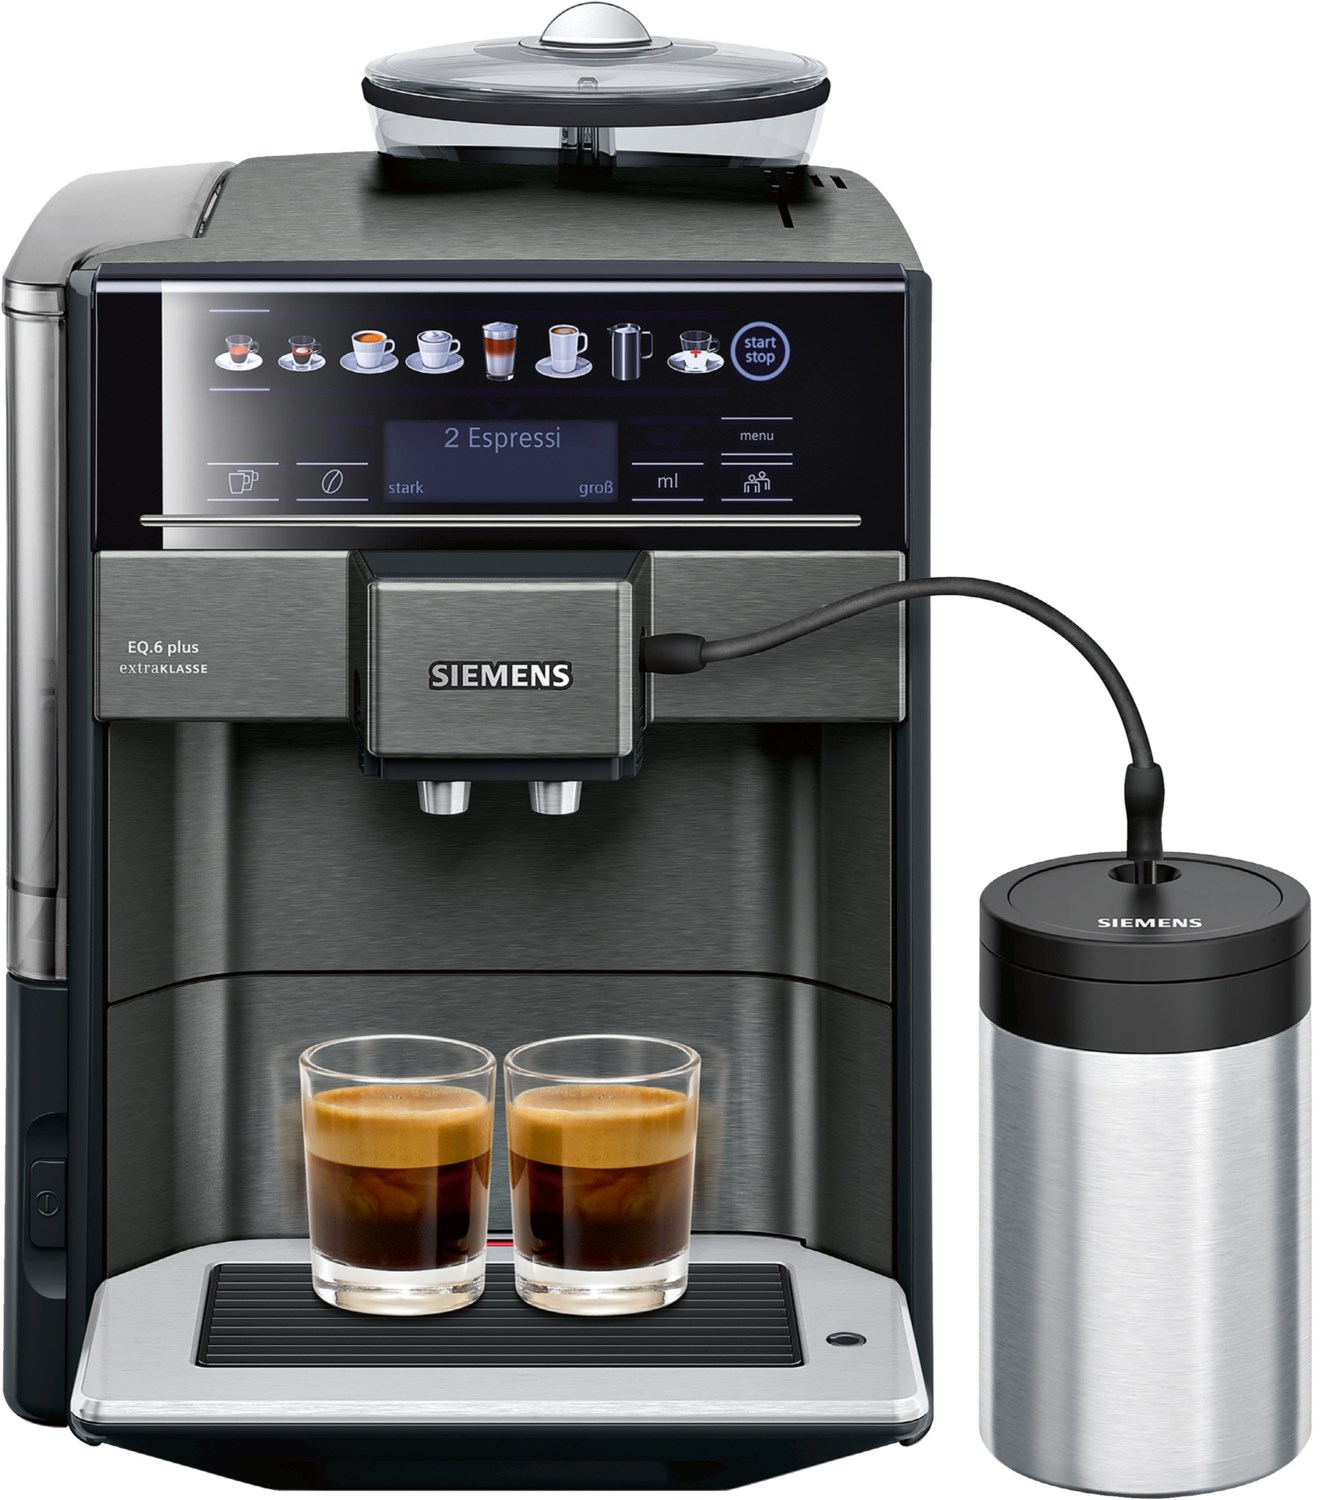 EQ.6 plus extraKlasse TE657F09DE Kaffee-Vollautomat dark inox von Siemens